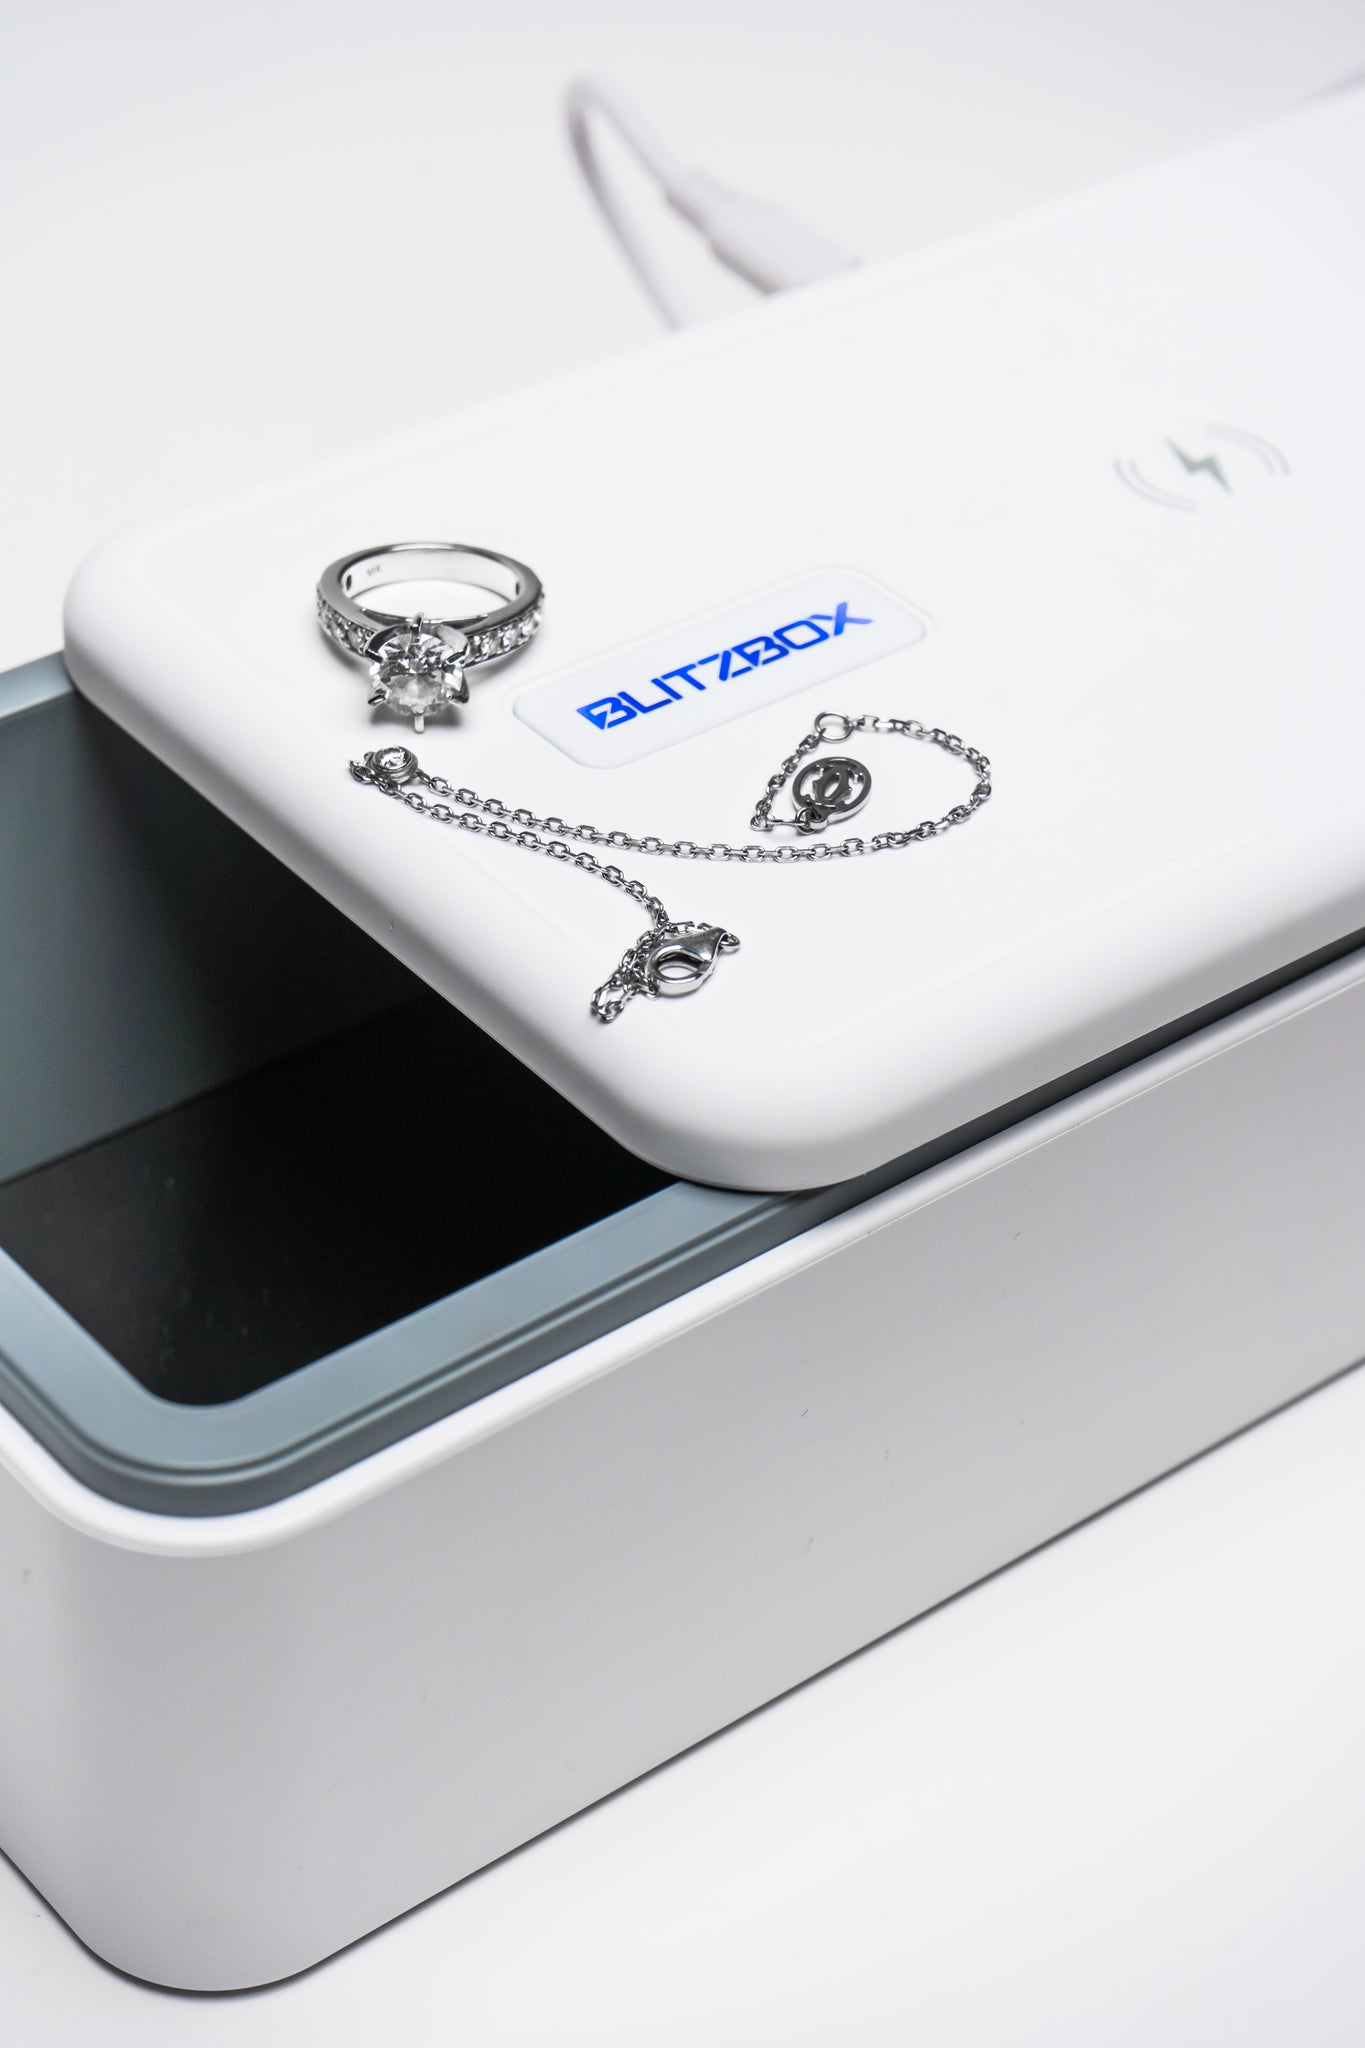 BlitzBox Pro 8 UV Phone Sterilizer disinfects jewellery